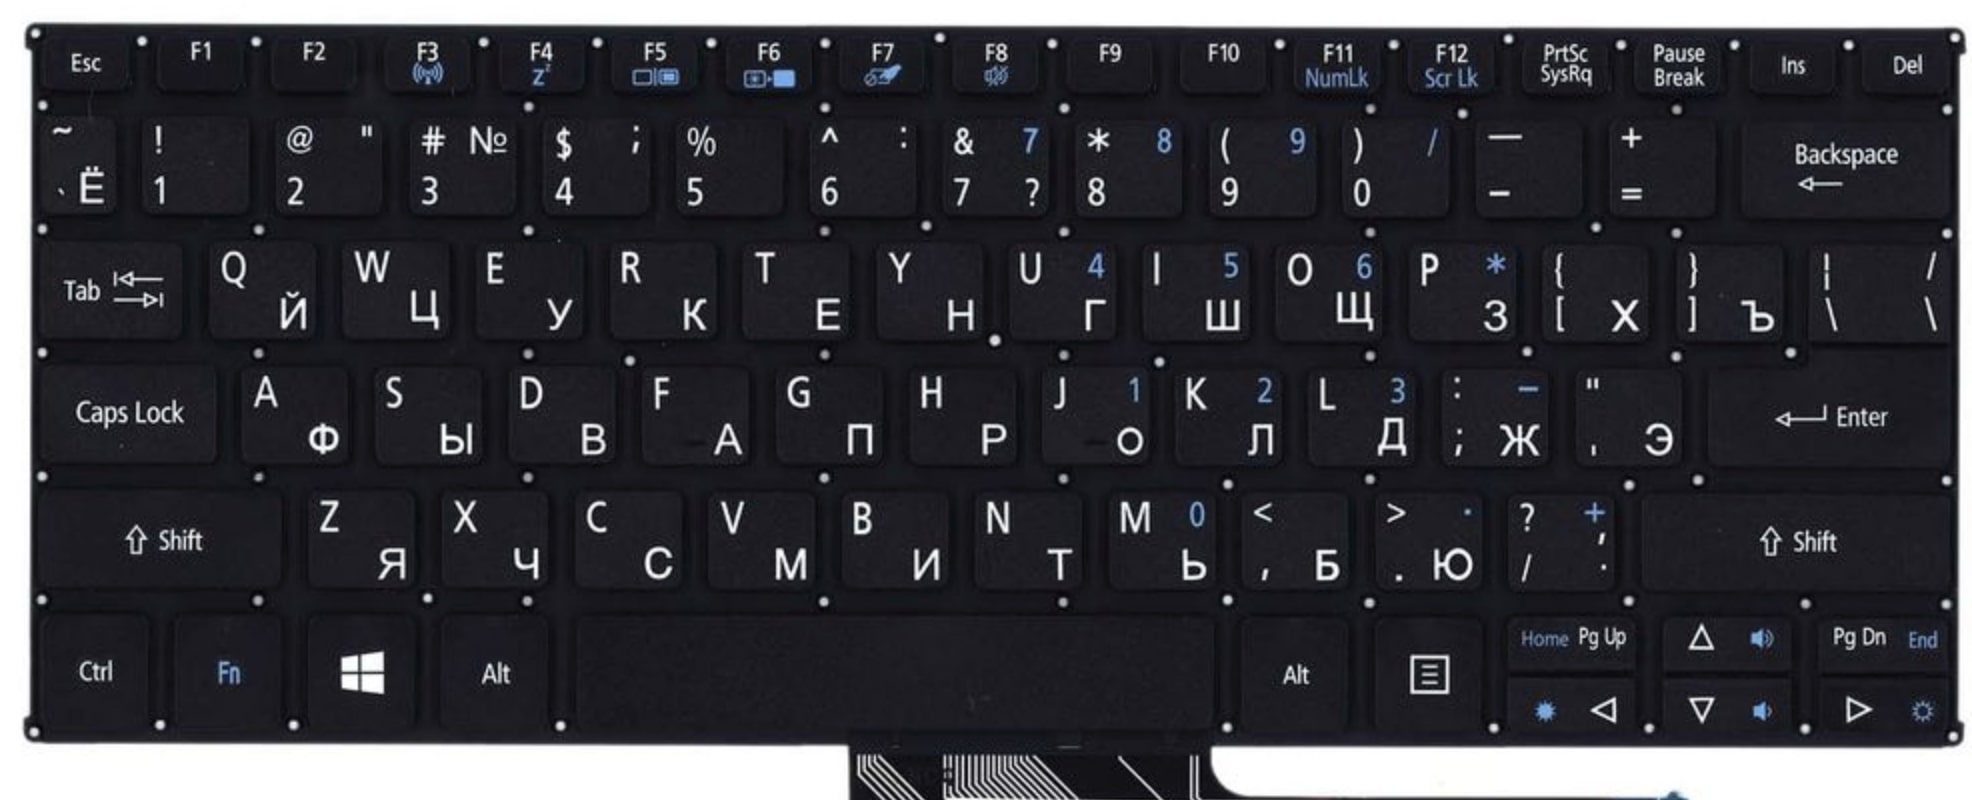 Буквы клавиатуры поменялись местами. Управление Секиро на клаве. Клавиатура менен иштоо.